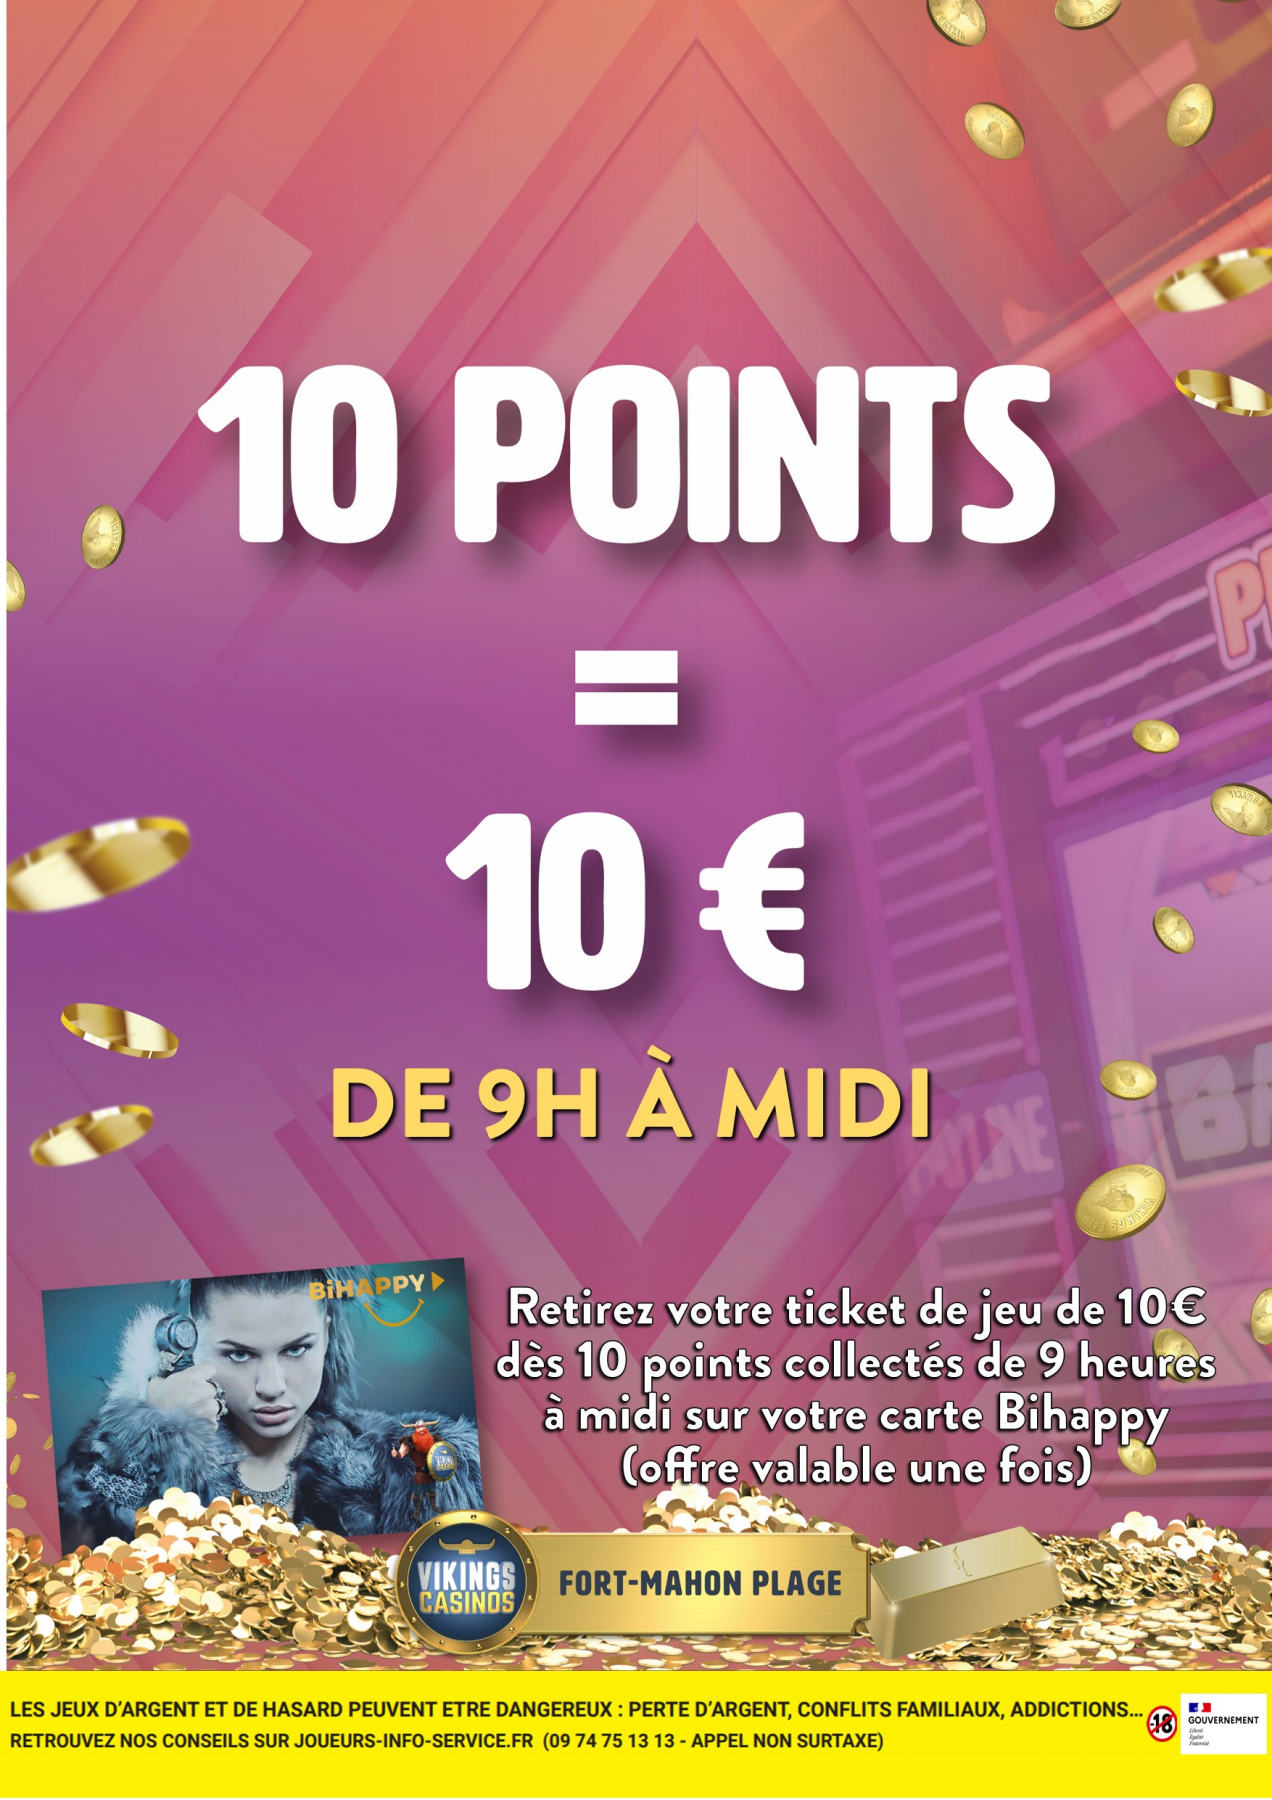 10 points = 10€ jusque midi